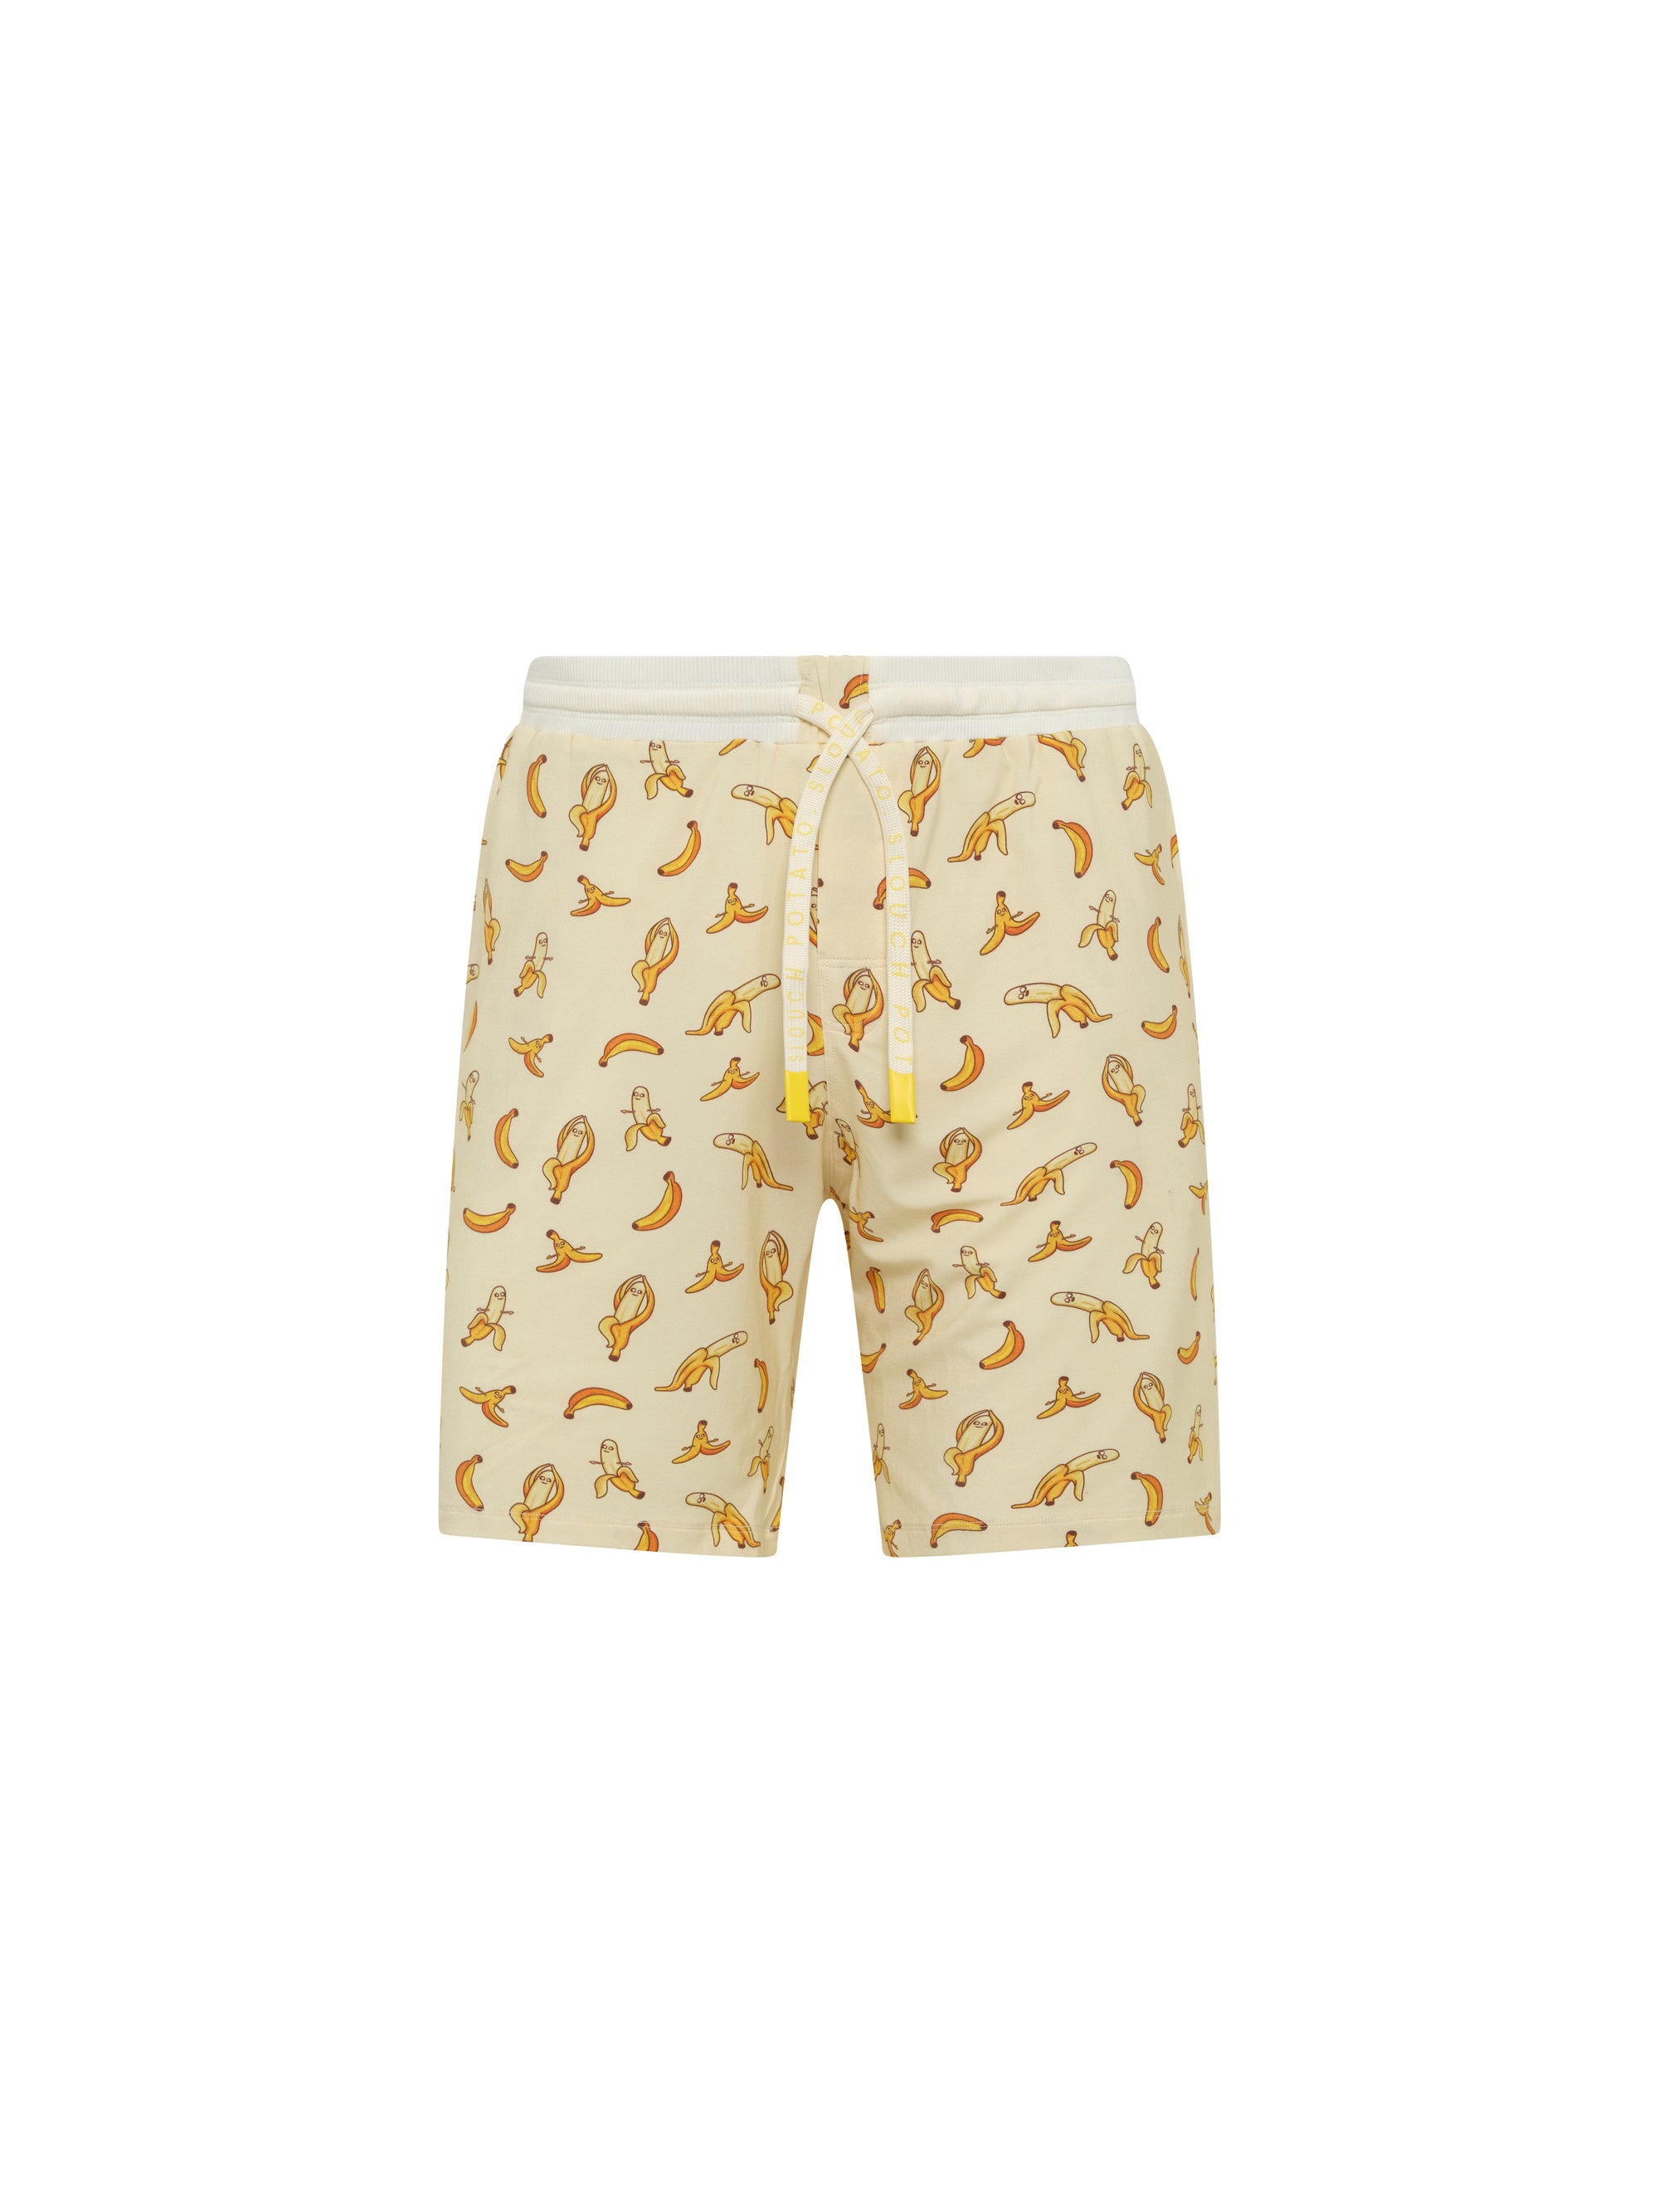 Slouch Shorts- Banana